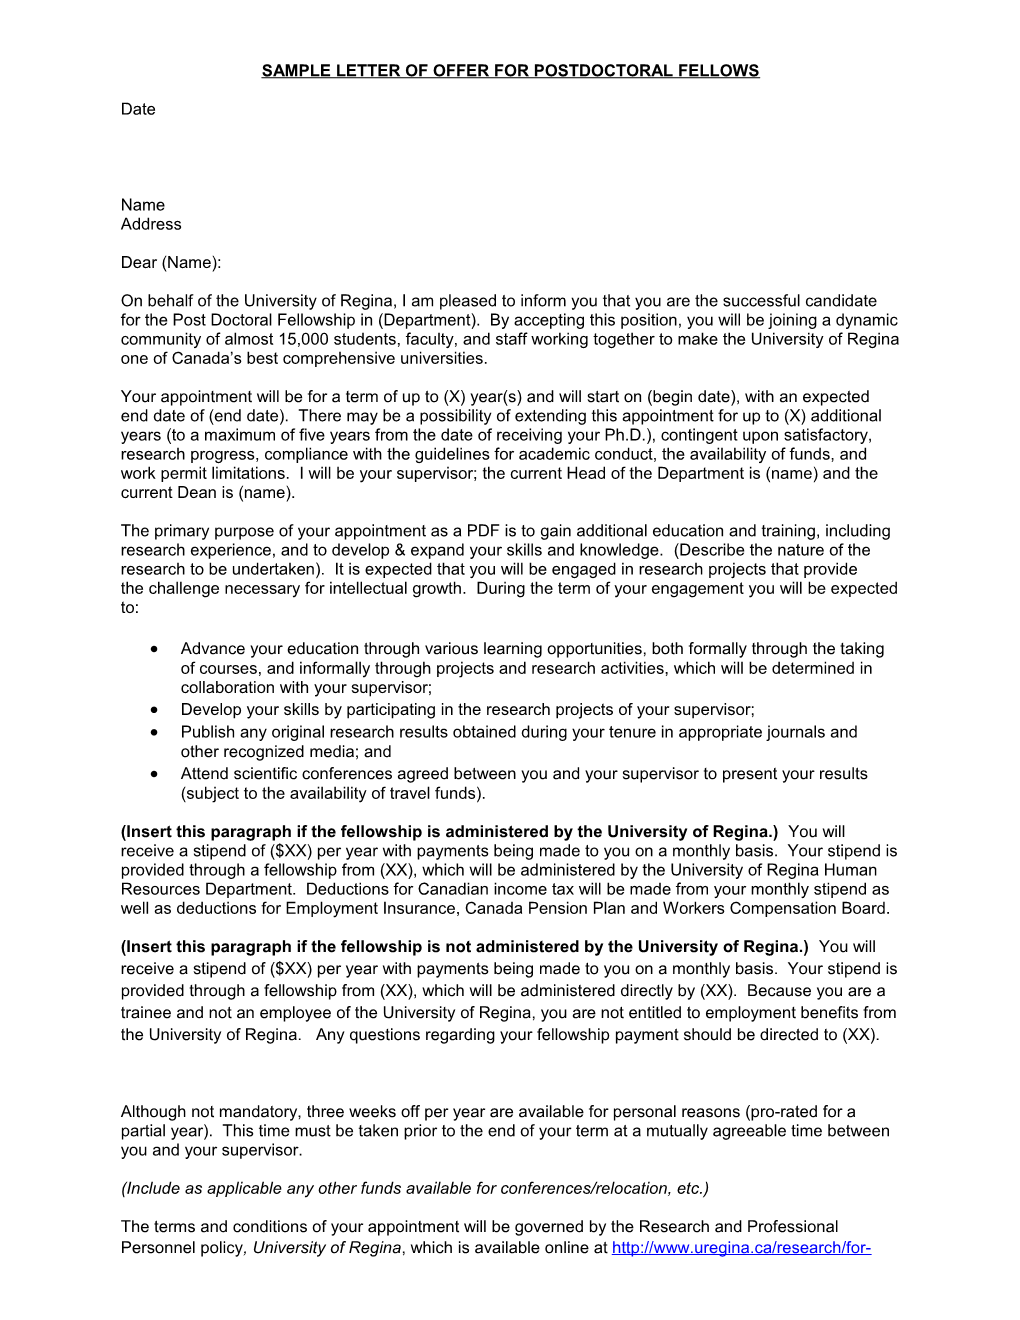 Sample Letter of Offer for Postdoctoral Fellows